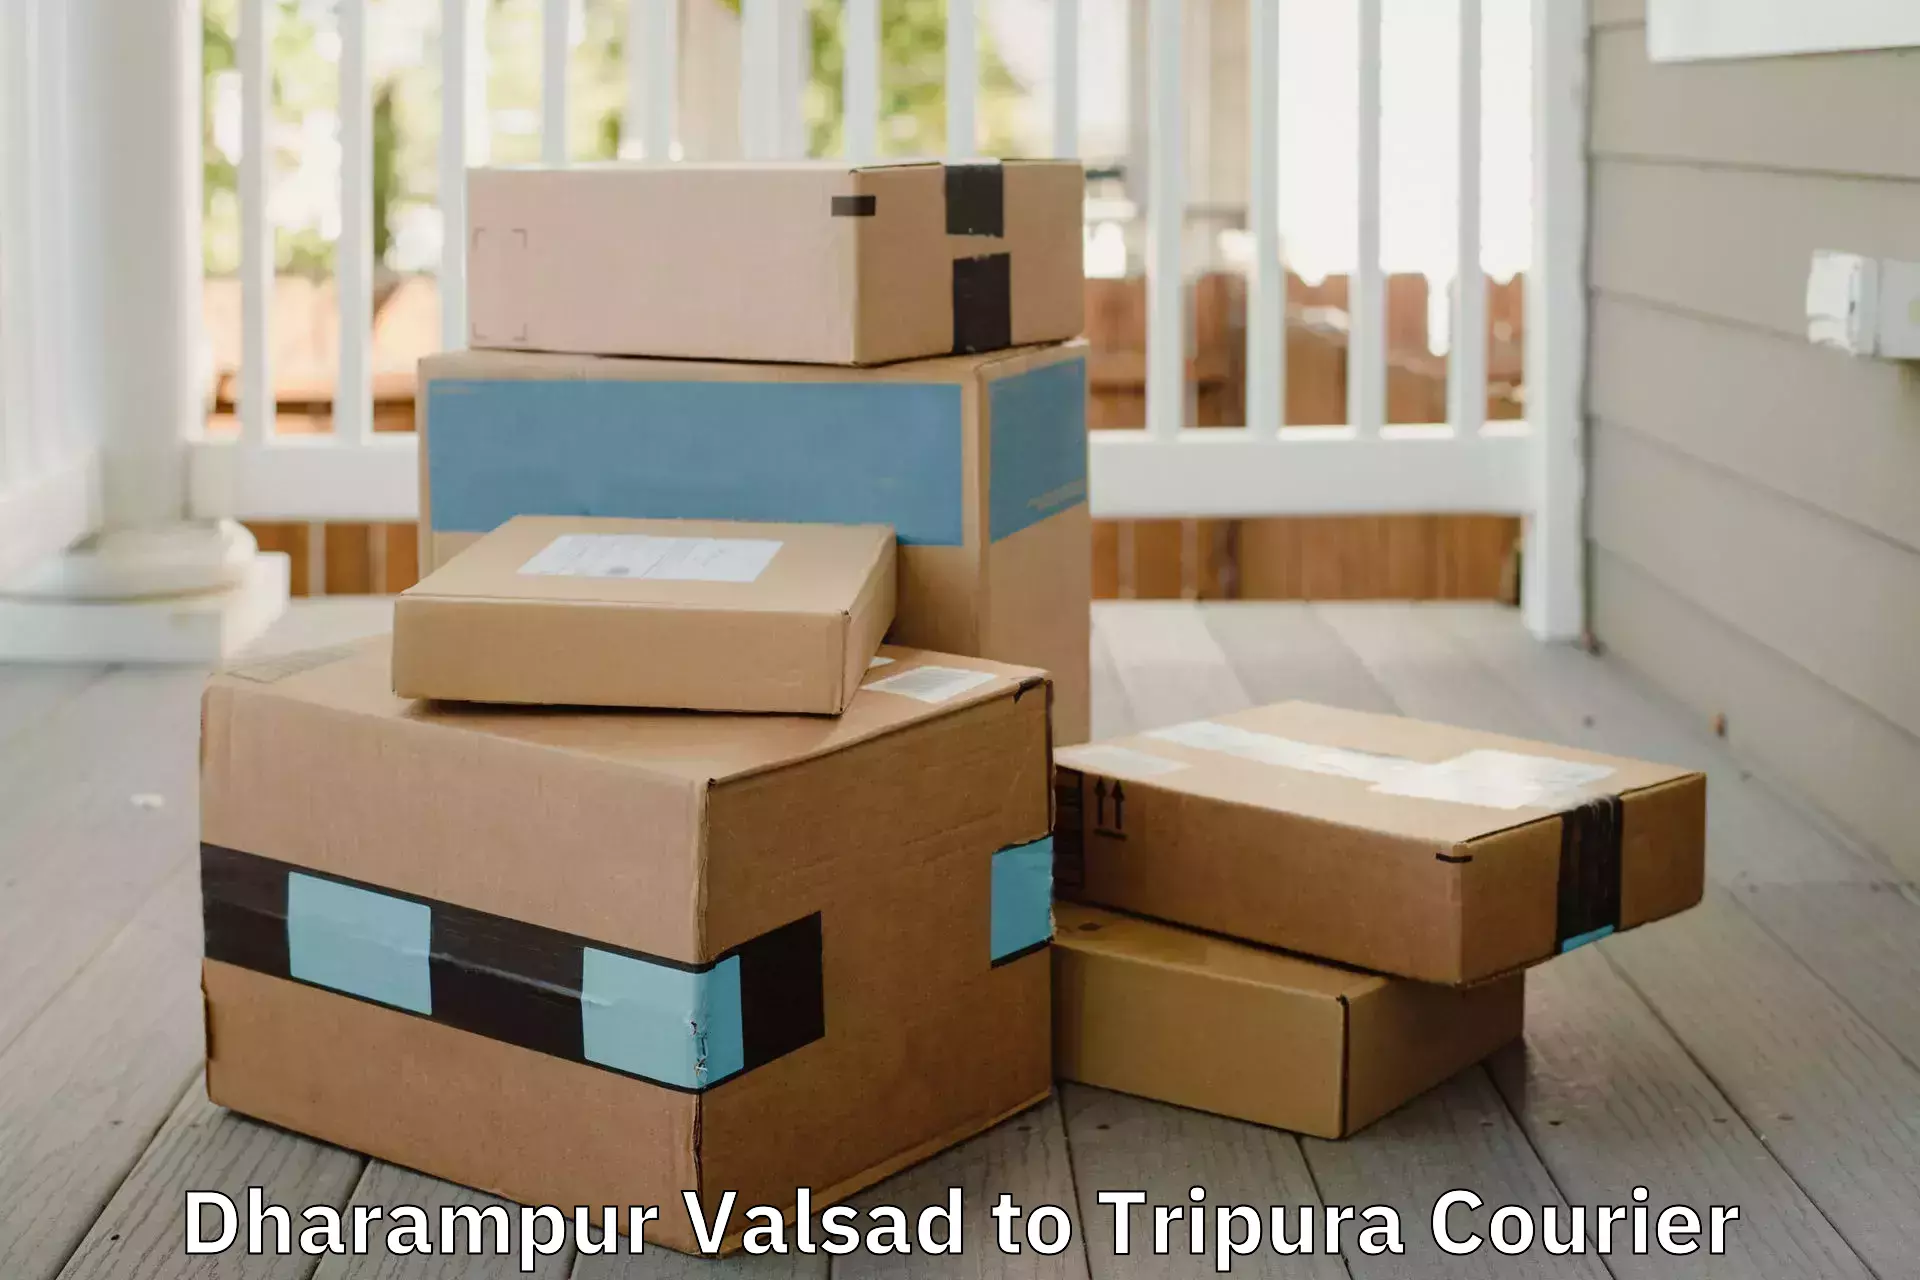 Furniture delivery service Dharampur Valsad to Manughat